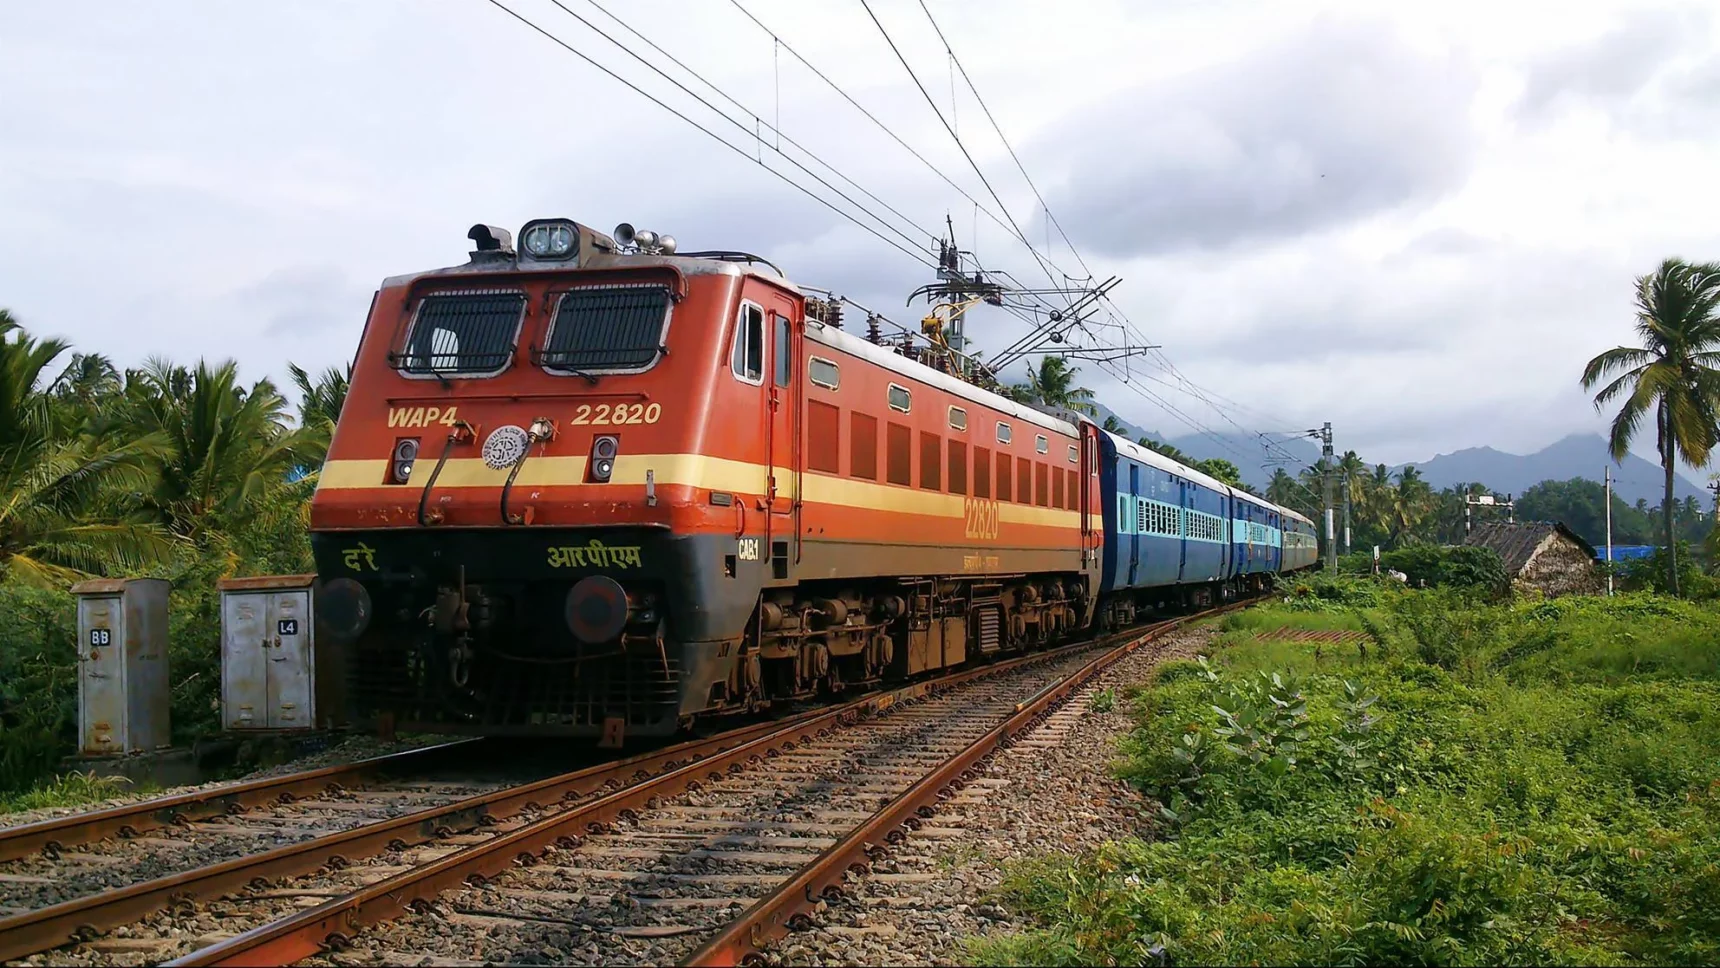 wap 4 class locomotive of indian railways 1